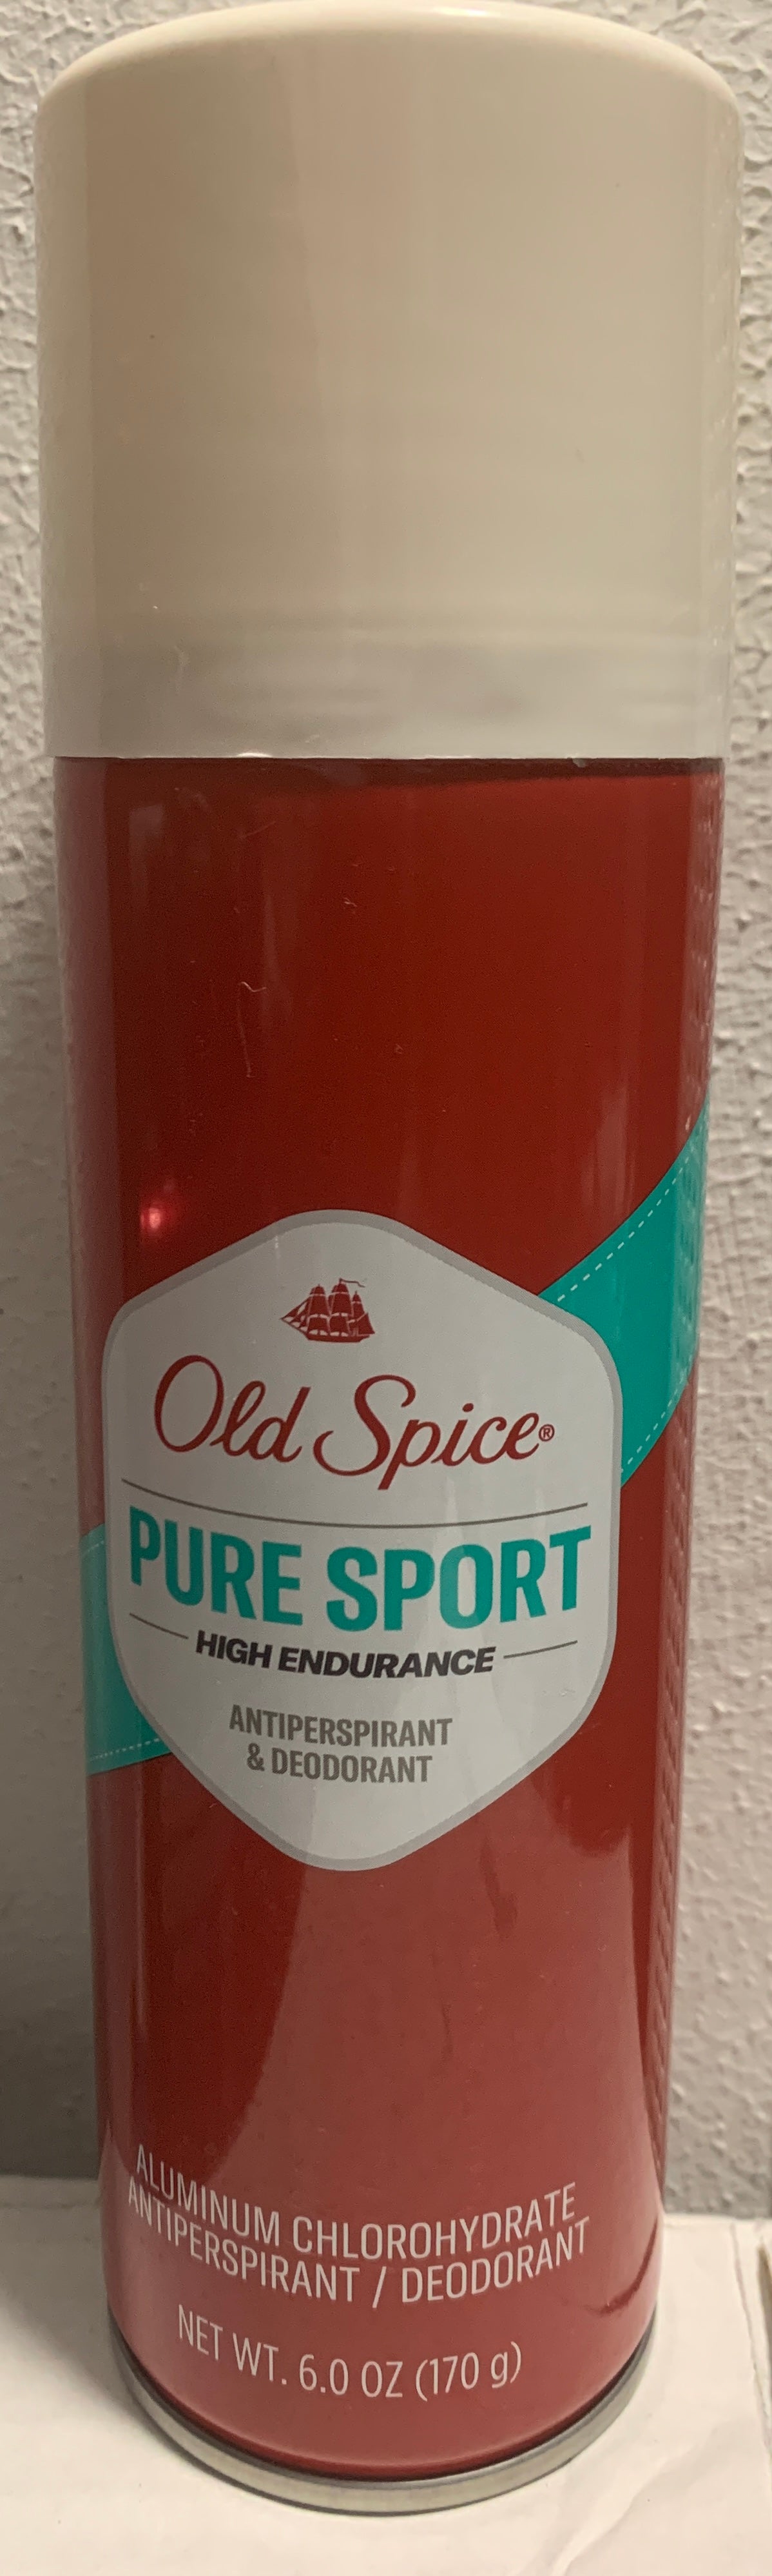 Men's Deodorant Old Spice Pure Sport